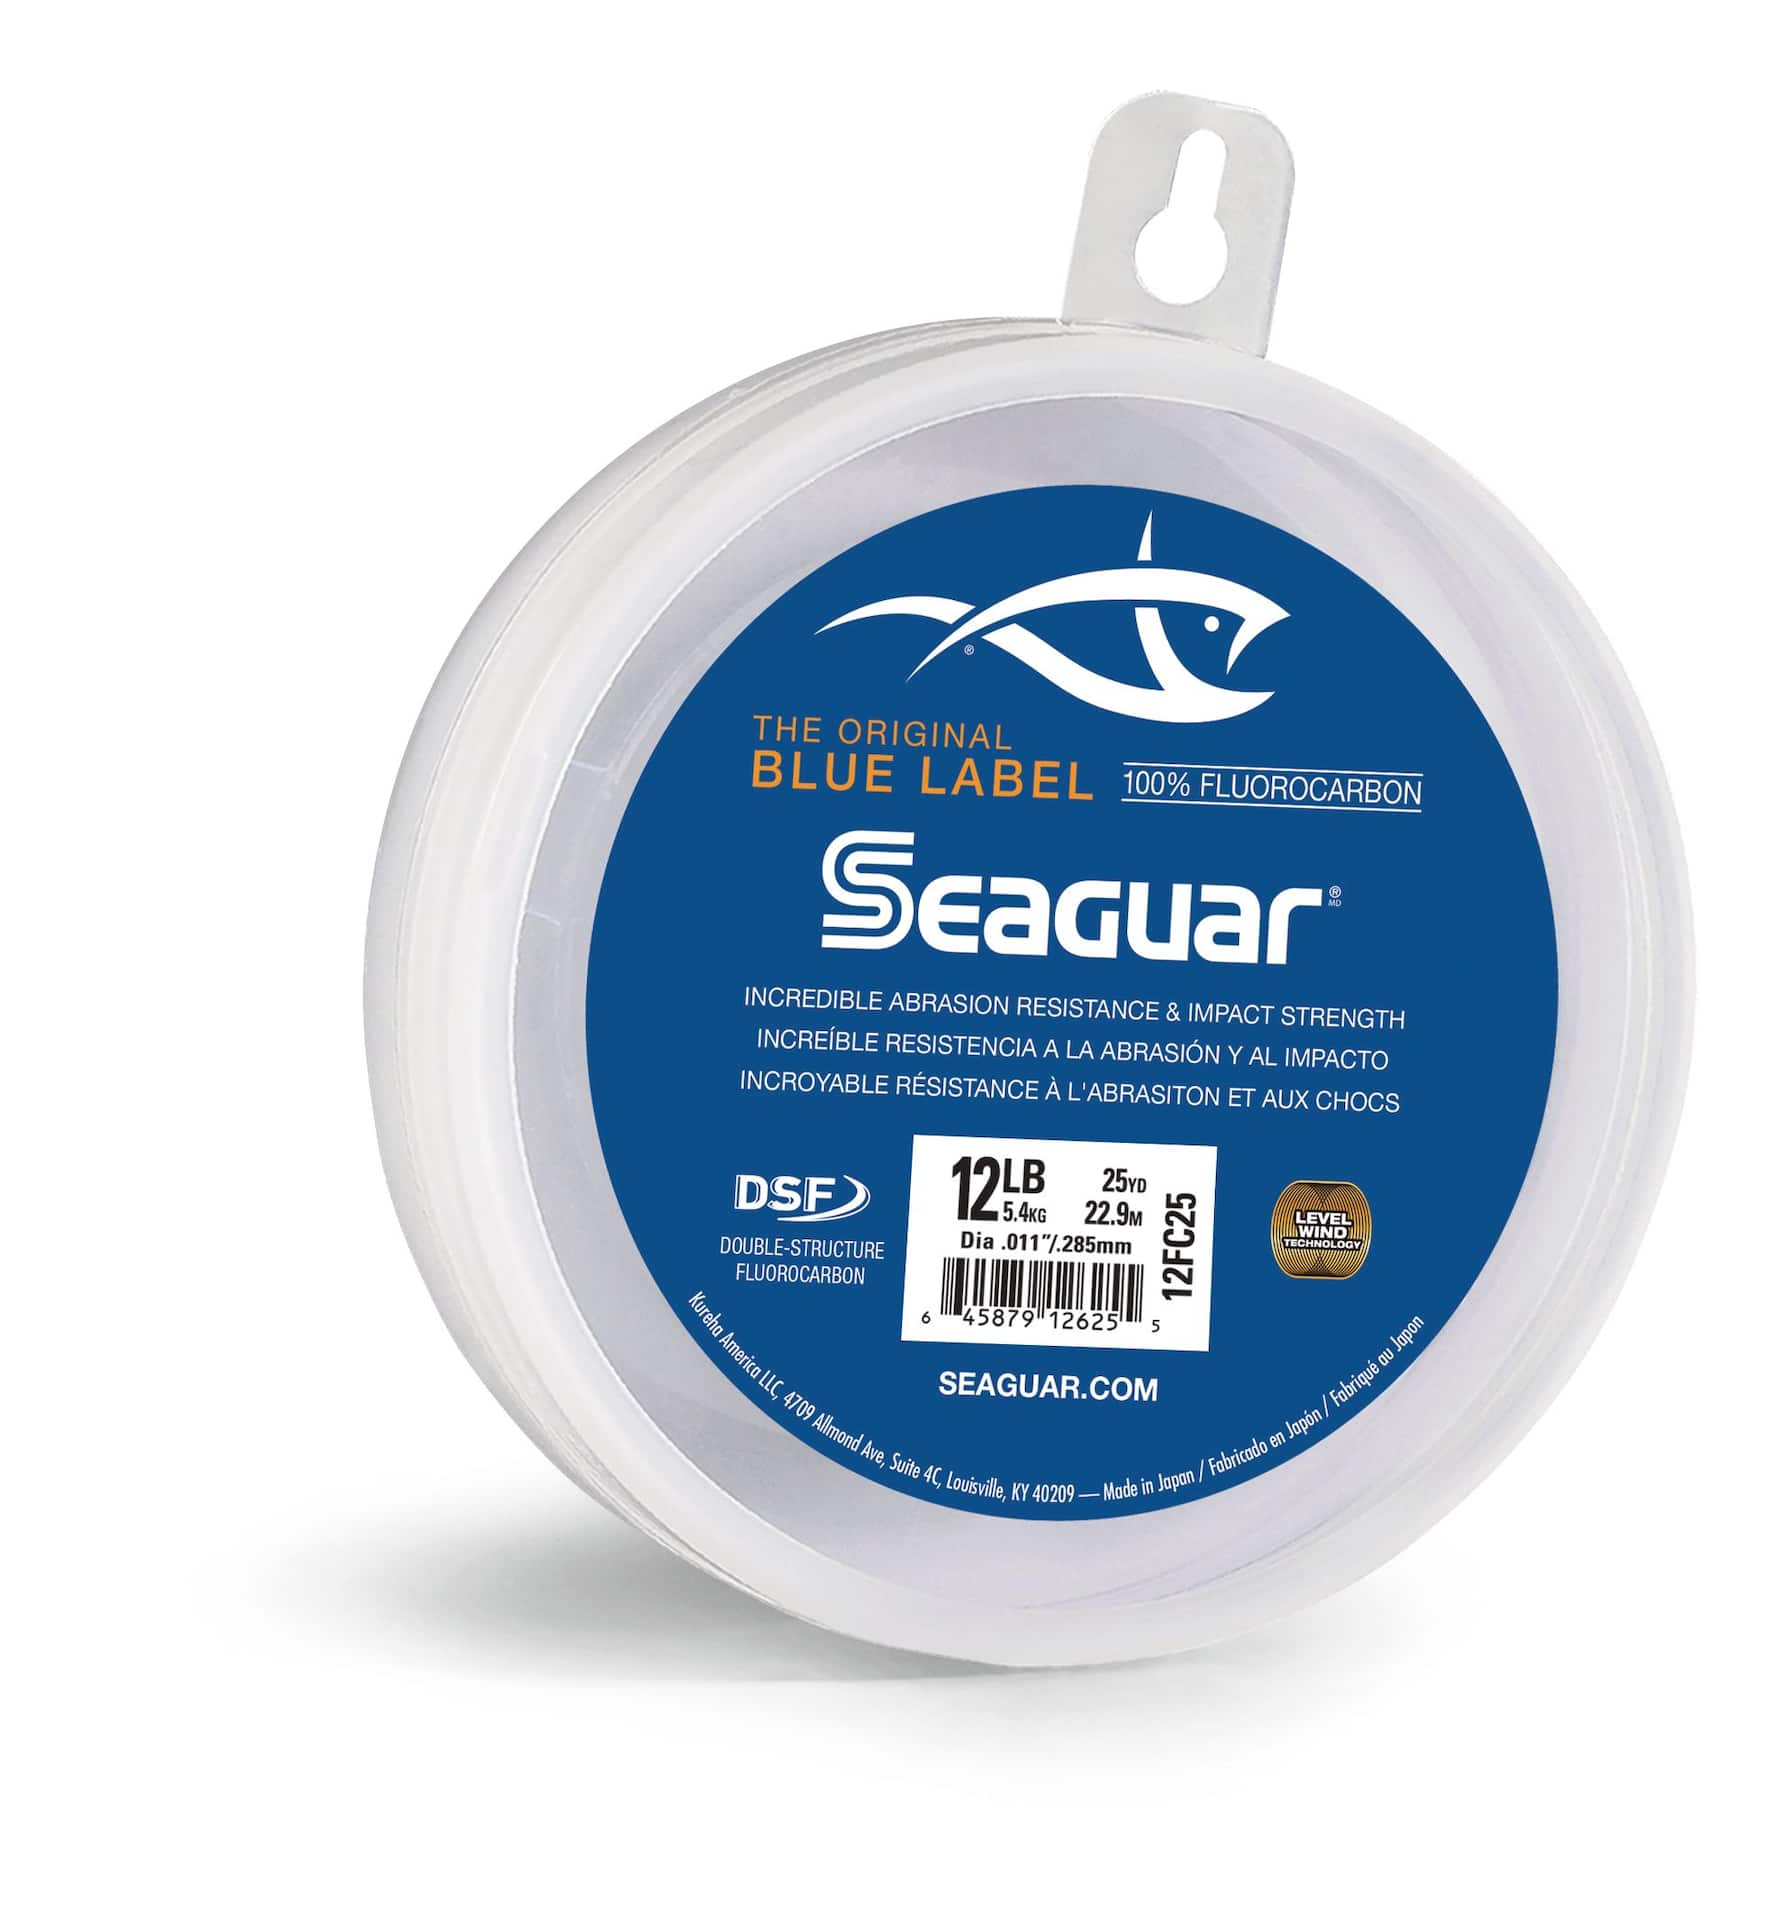 Seaguar Blue Label Fluorocarbon Leader Material, Clear